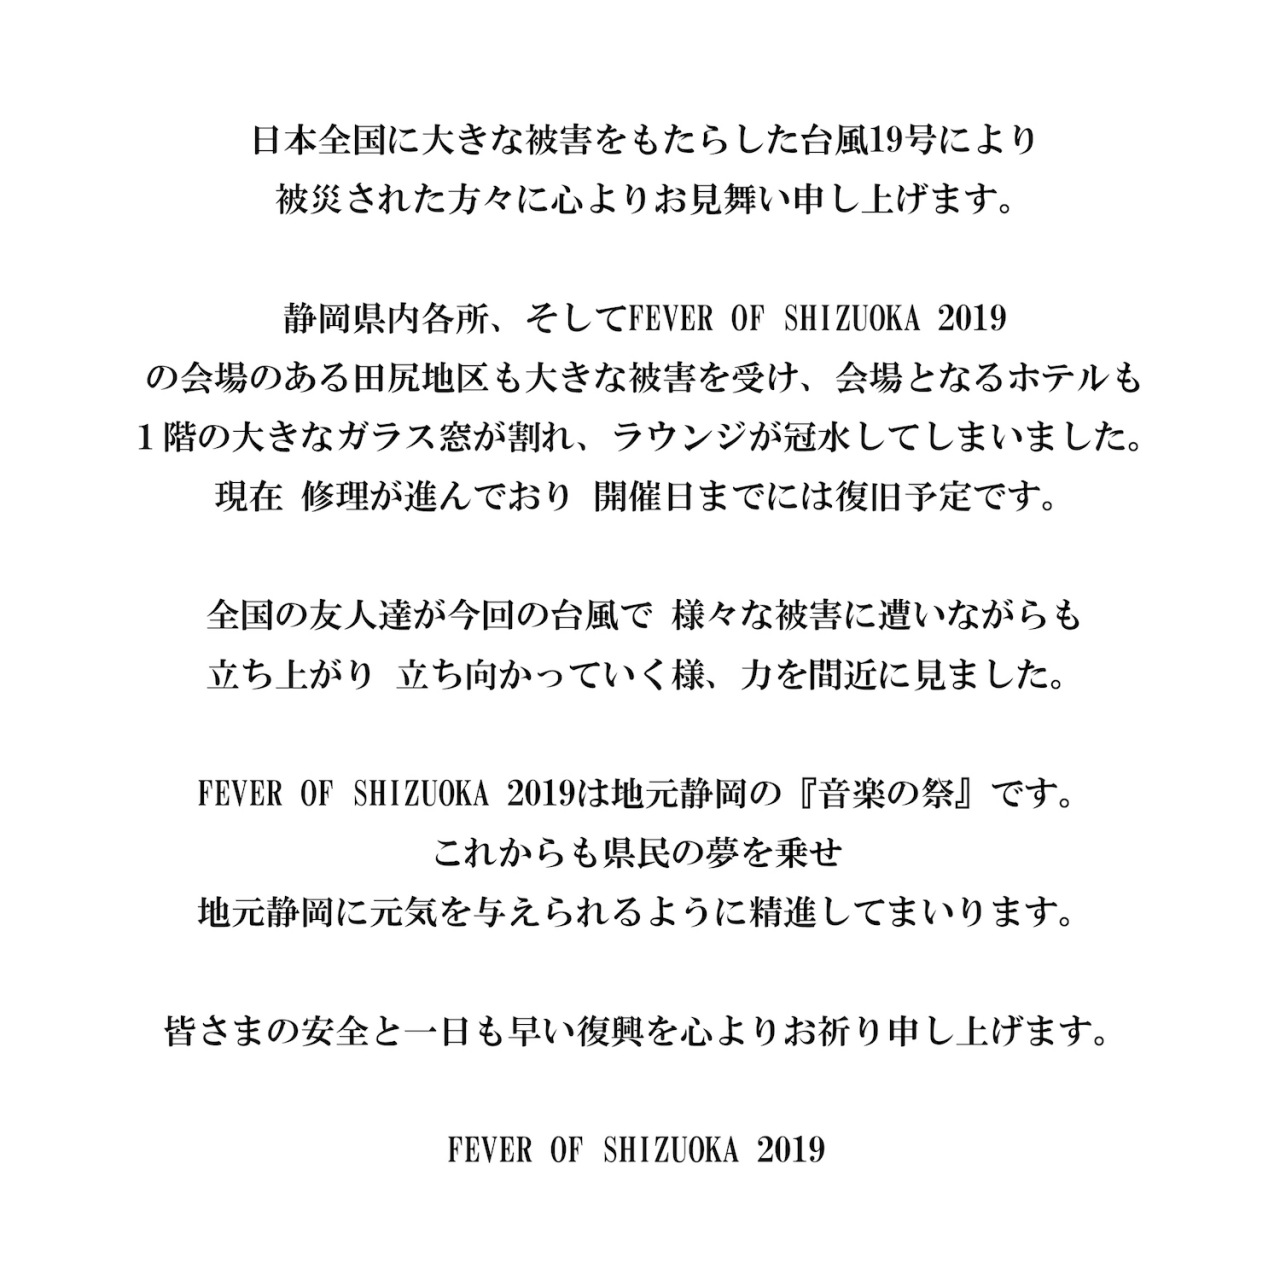 〈FEVER OF SHIZUOKA 2019〉タイムテーブル公開、および今回の台風19号で被災された皆様へ